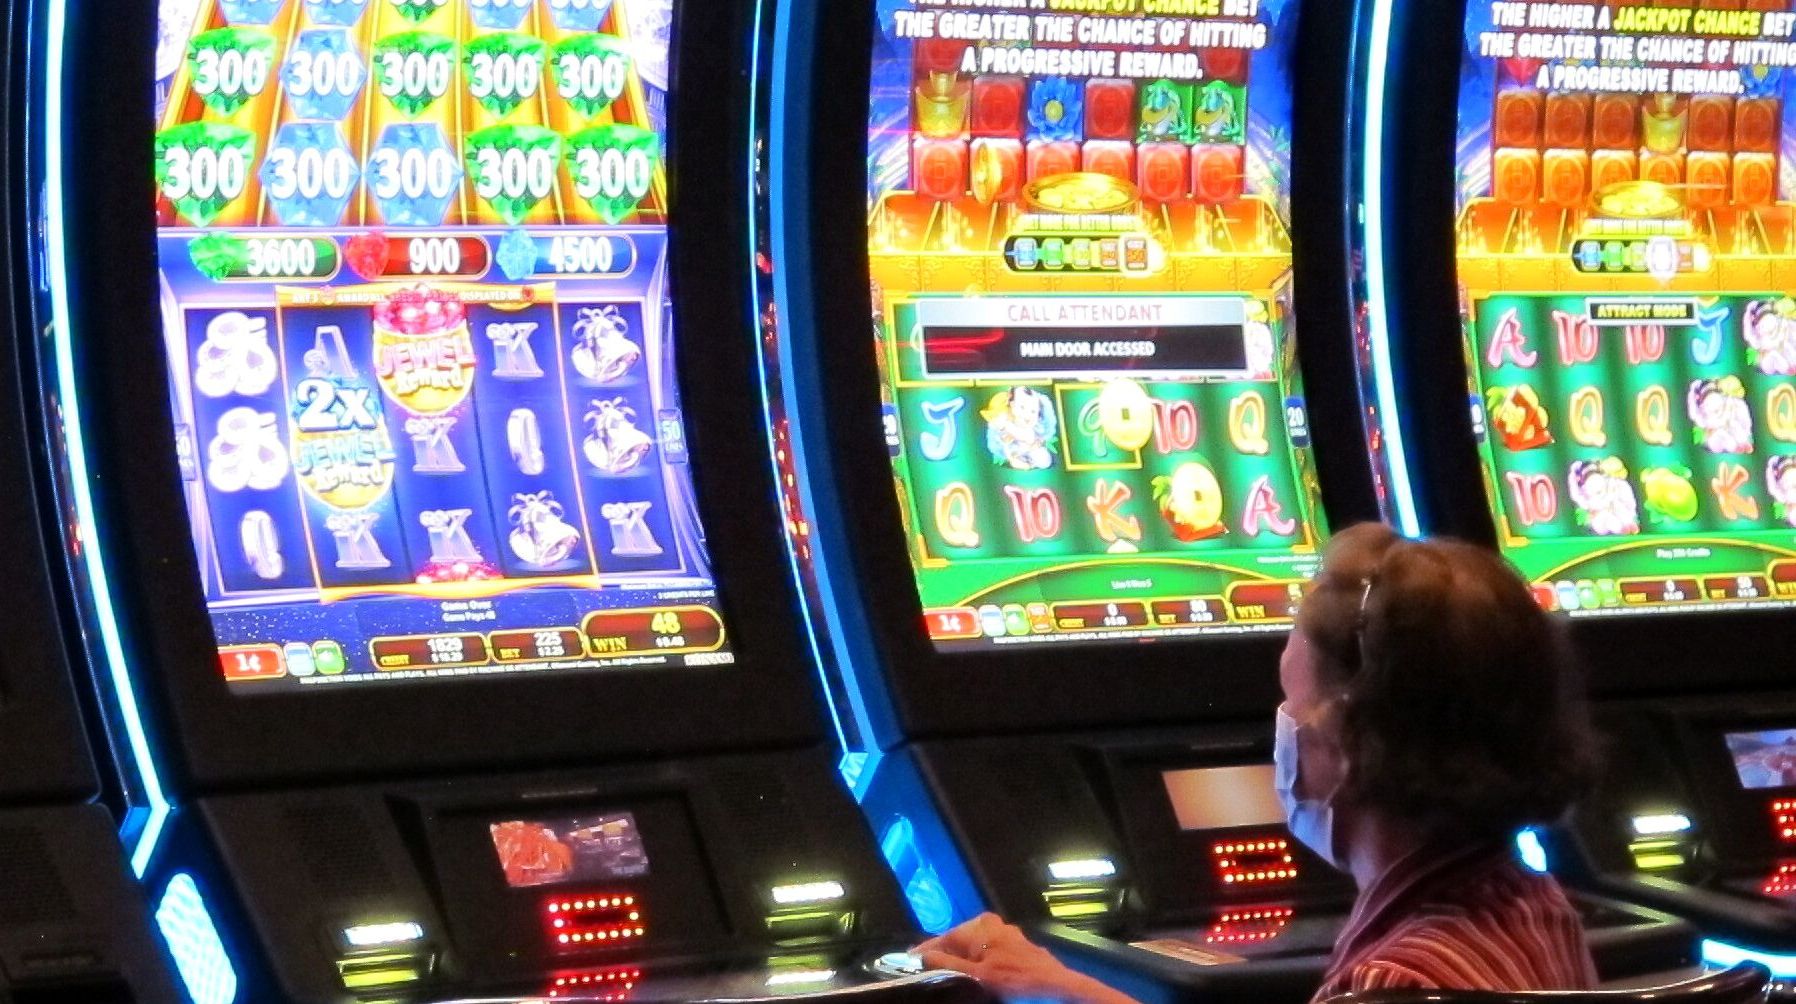 Jackpot! Expansion of Gambling Wins Big at Polls - Headline Wealth